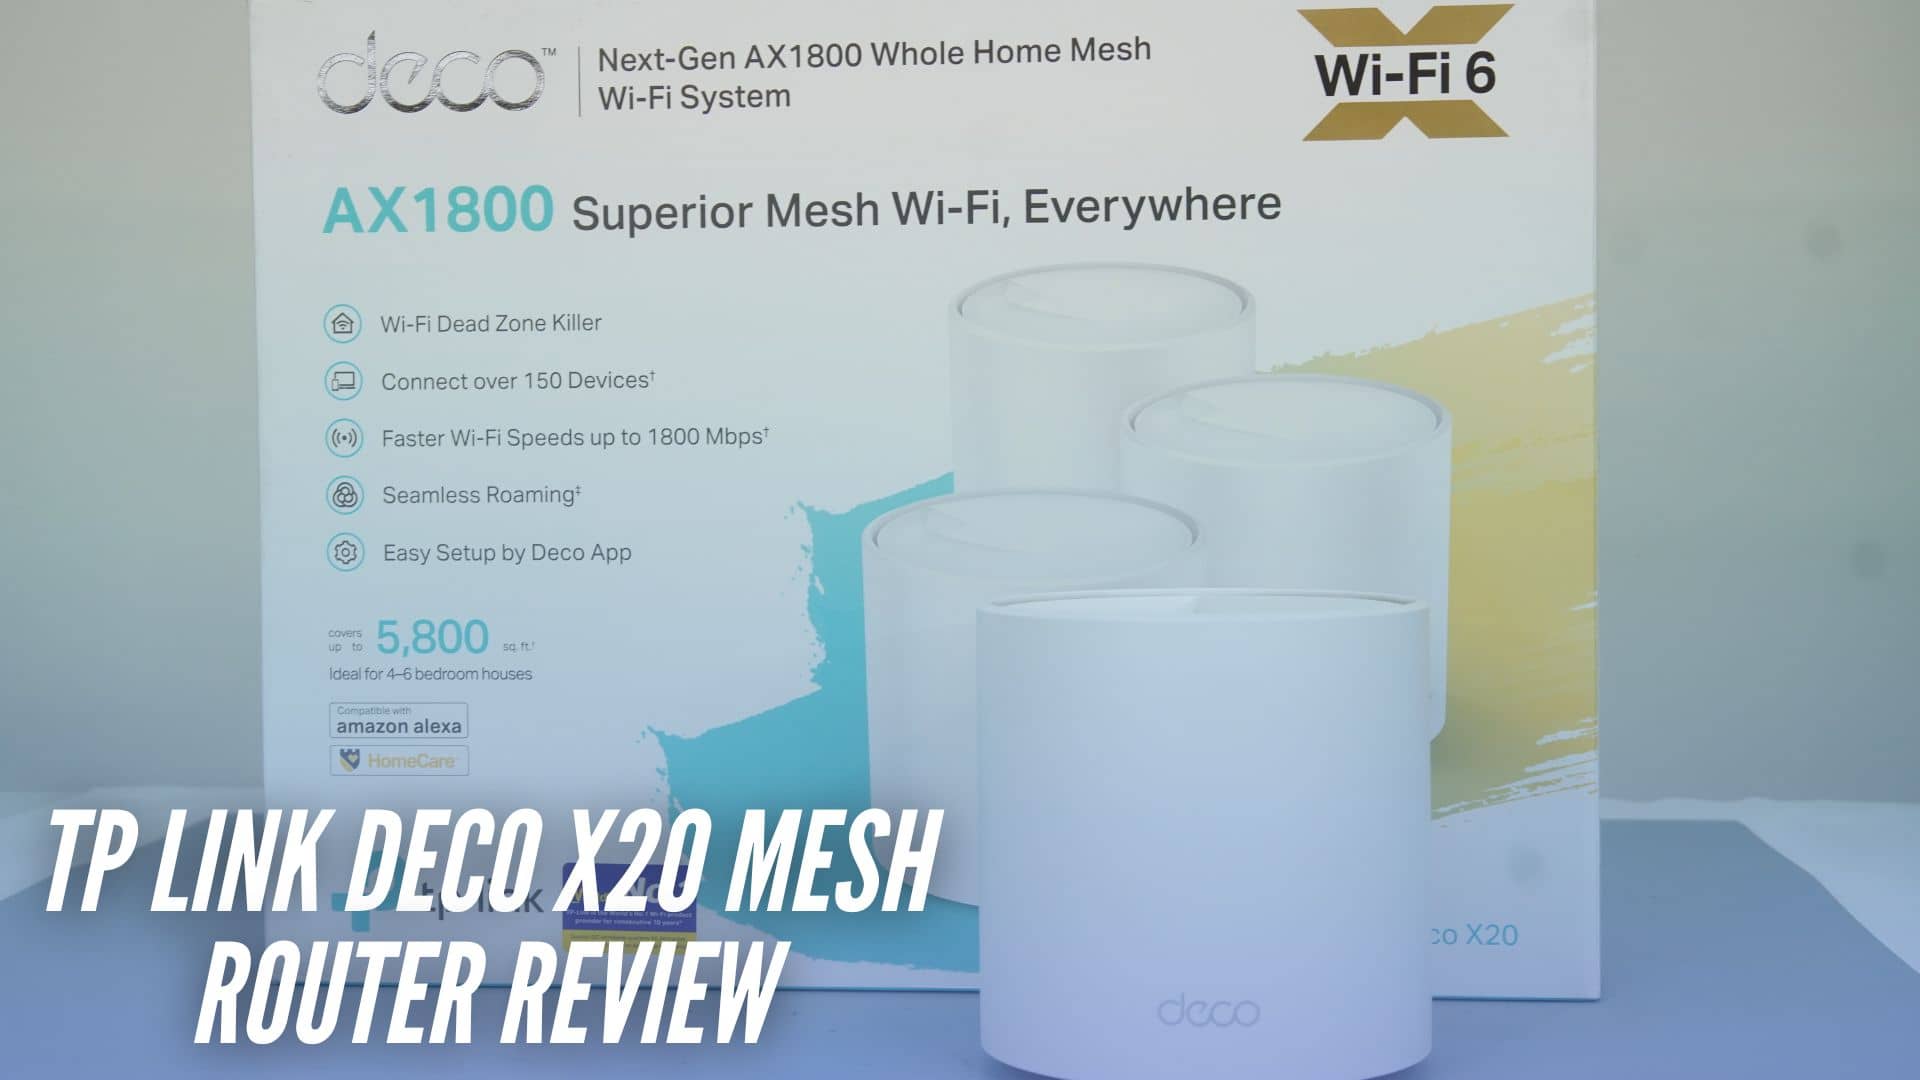 TP Link Deco X20 Mesh Router Review